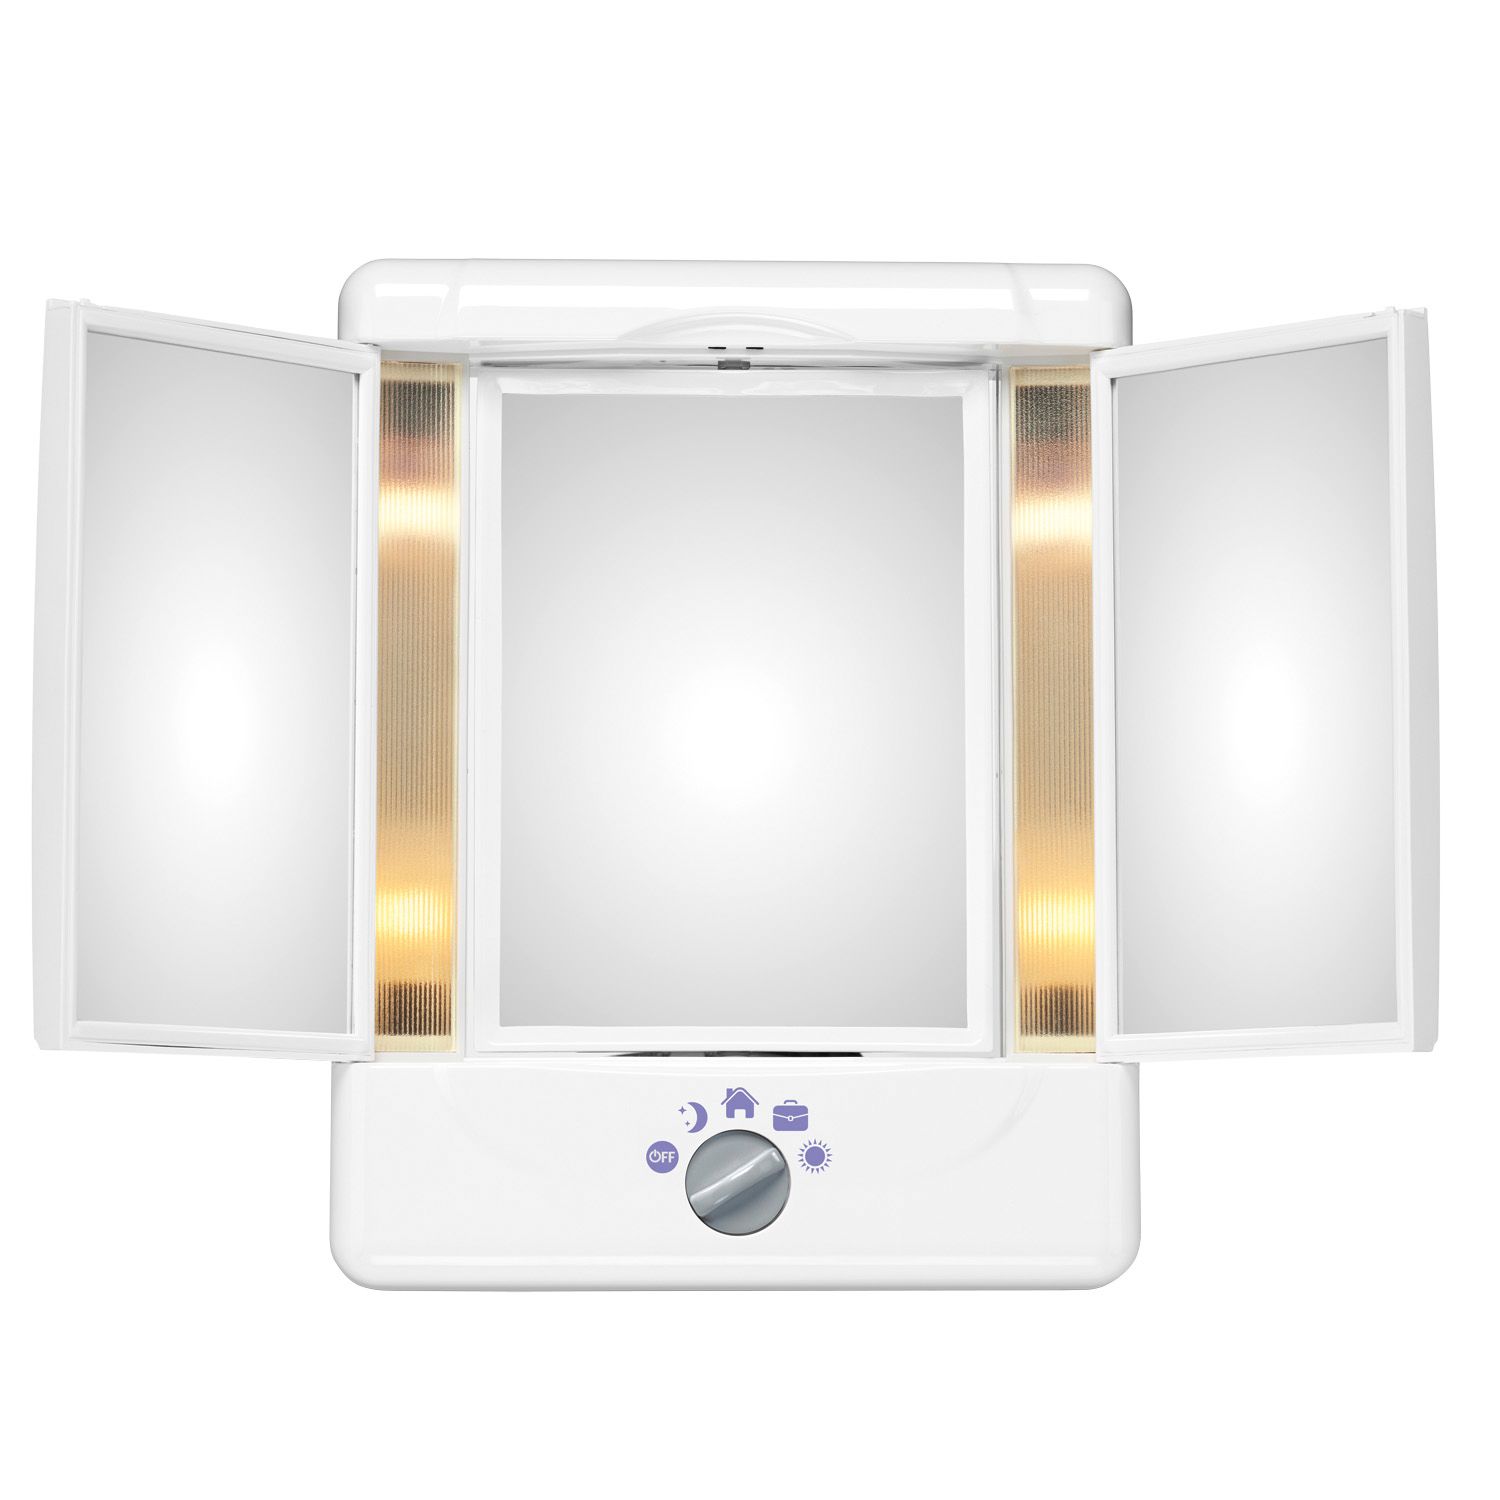 conair lighted mirror